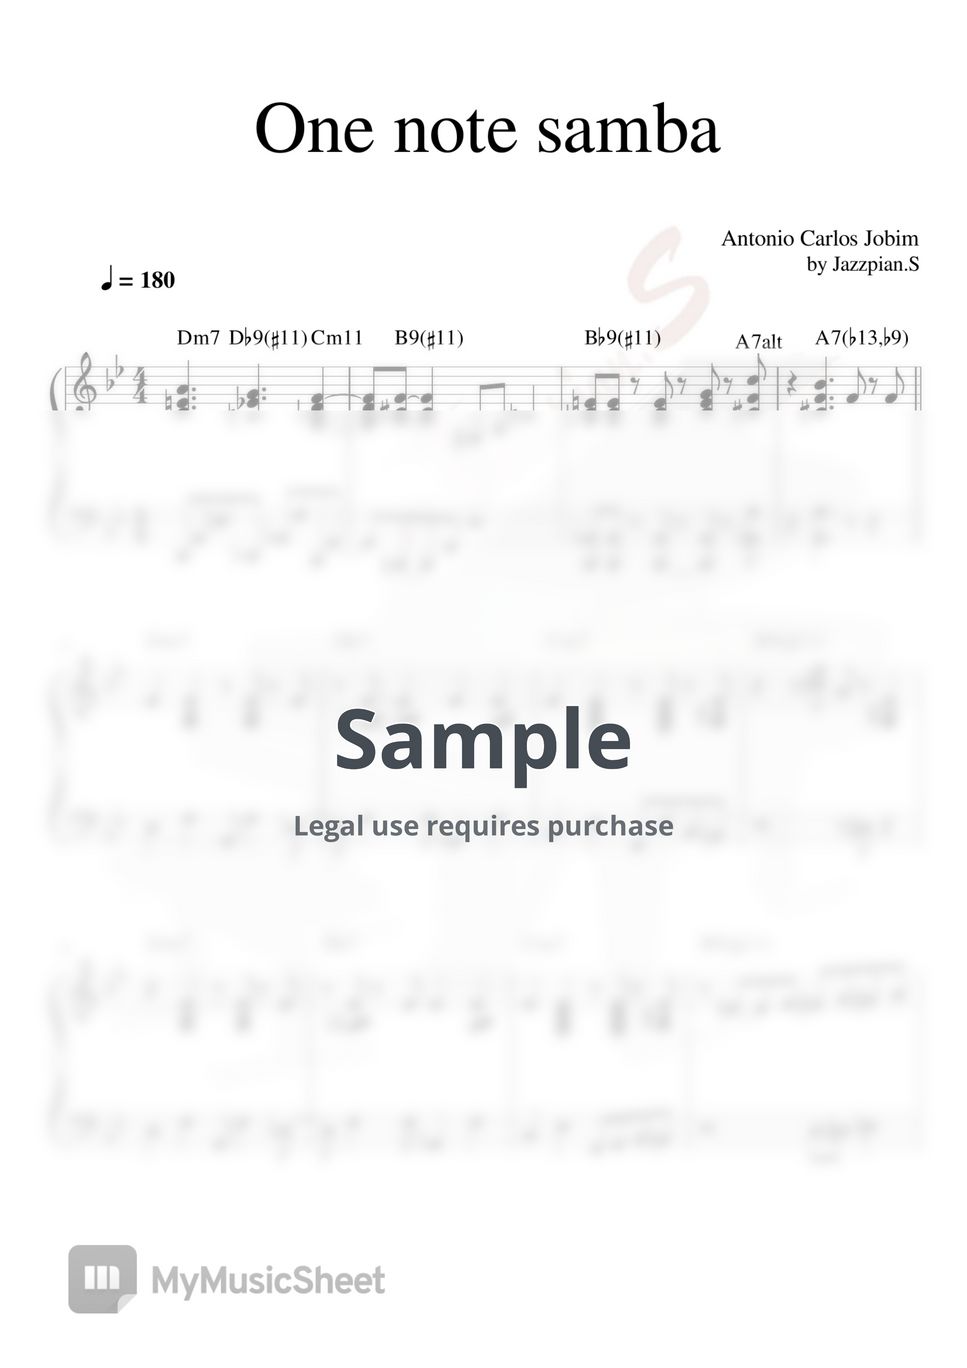 Antonio Carlos Jobim - One Note Samba (Brazilian Samba jazzpiano) by Jazzpian.S